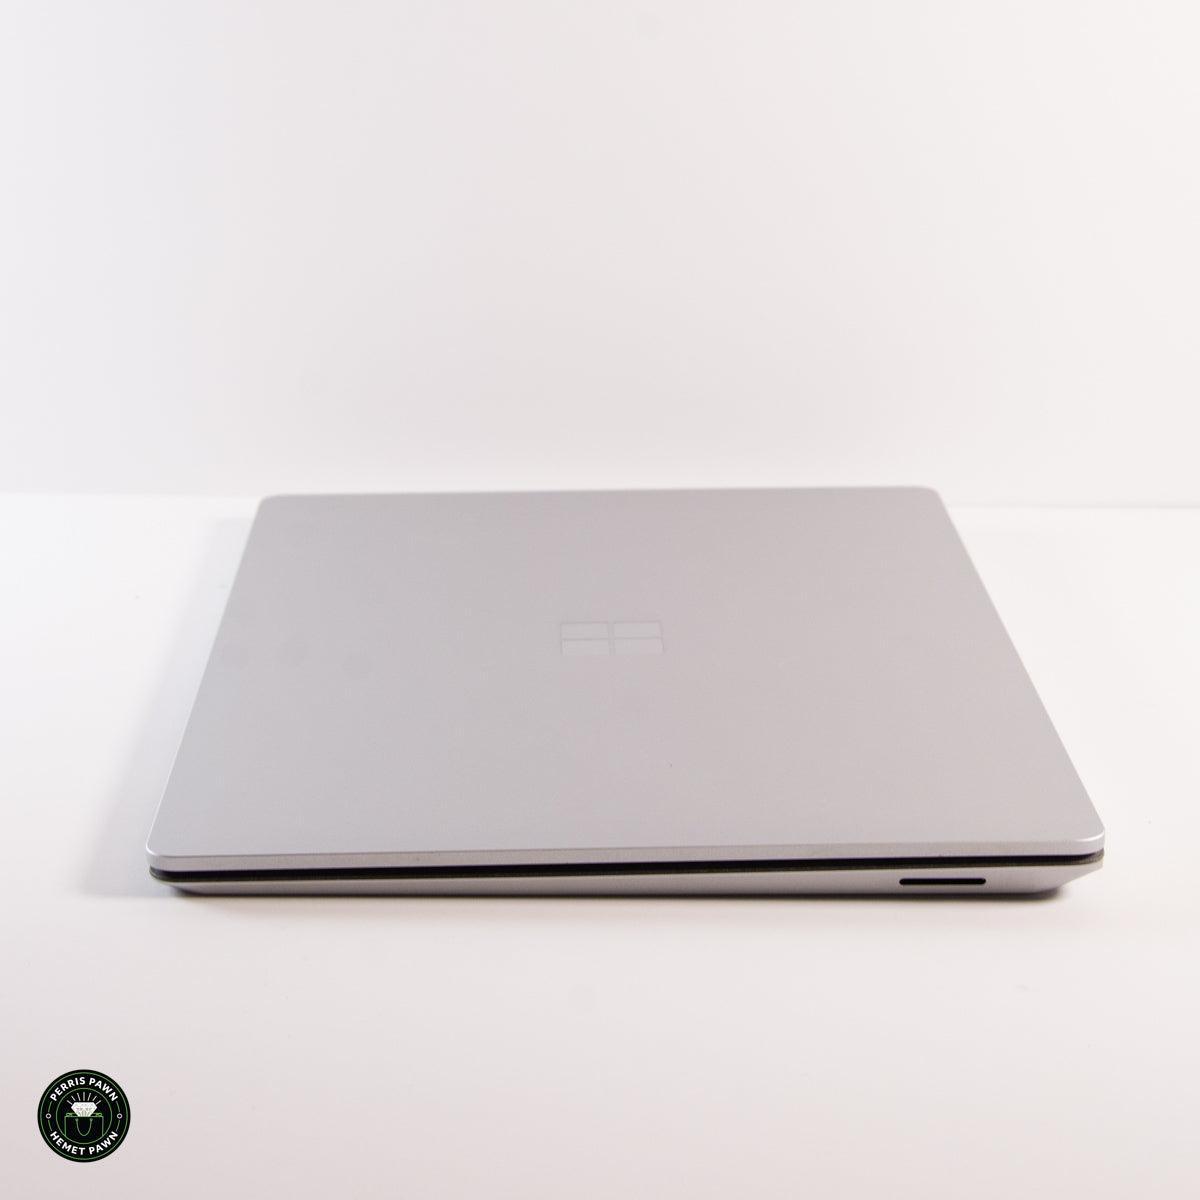 Microsoft Surface Laptop 3 - Intel i5 @ 1.2 GHz - 8 GB Ram - 128 GB SSD / 1867 - ipawnishop.com